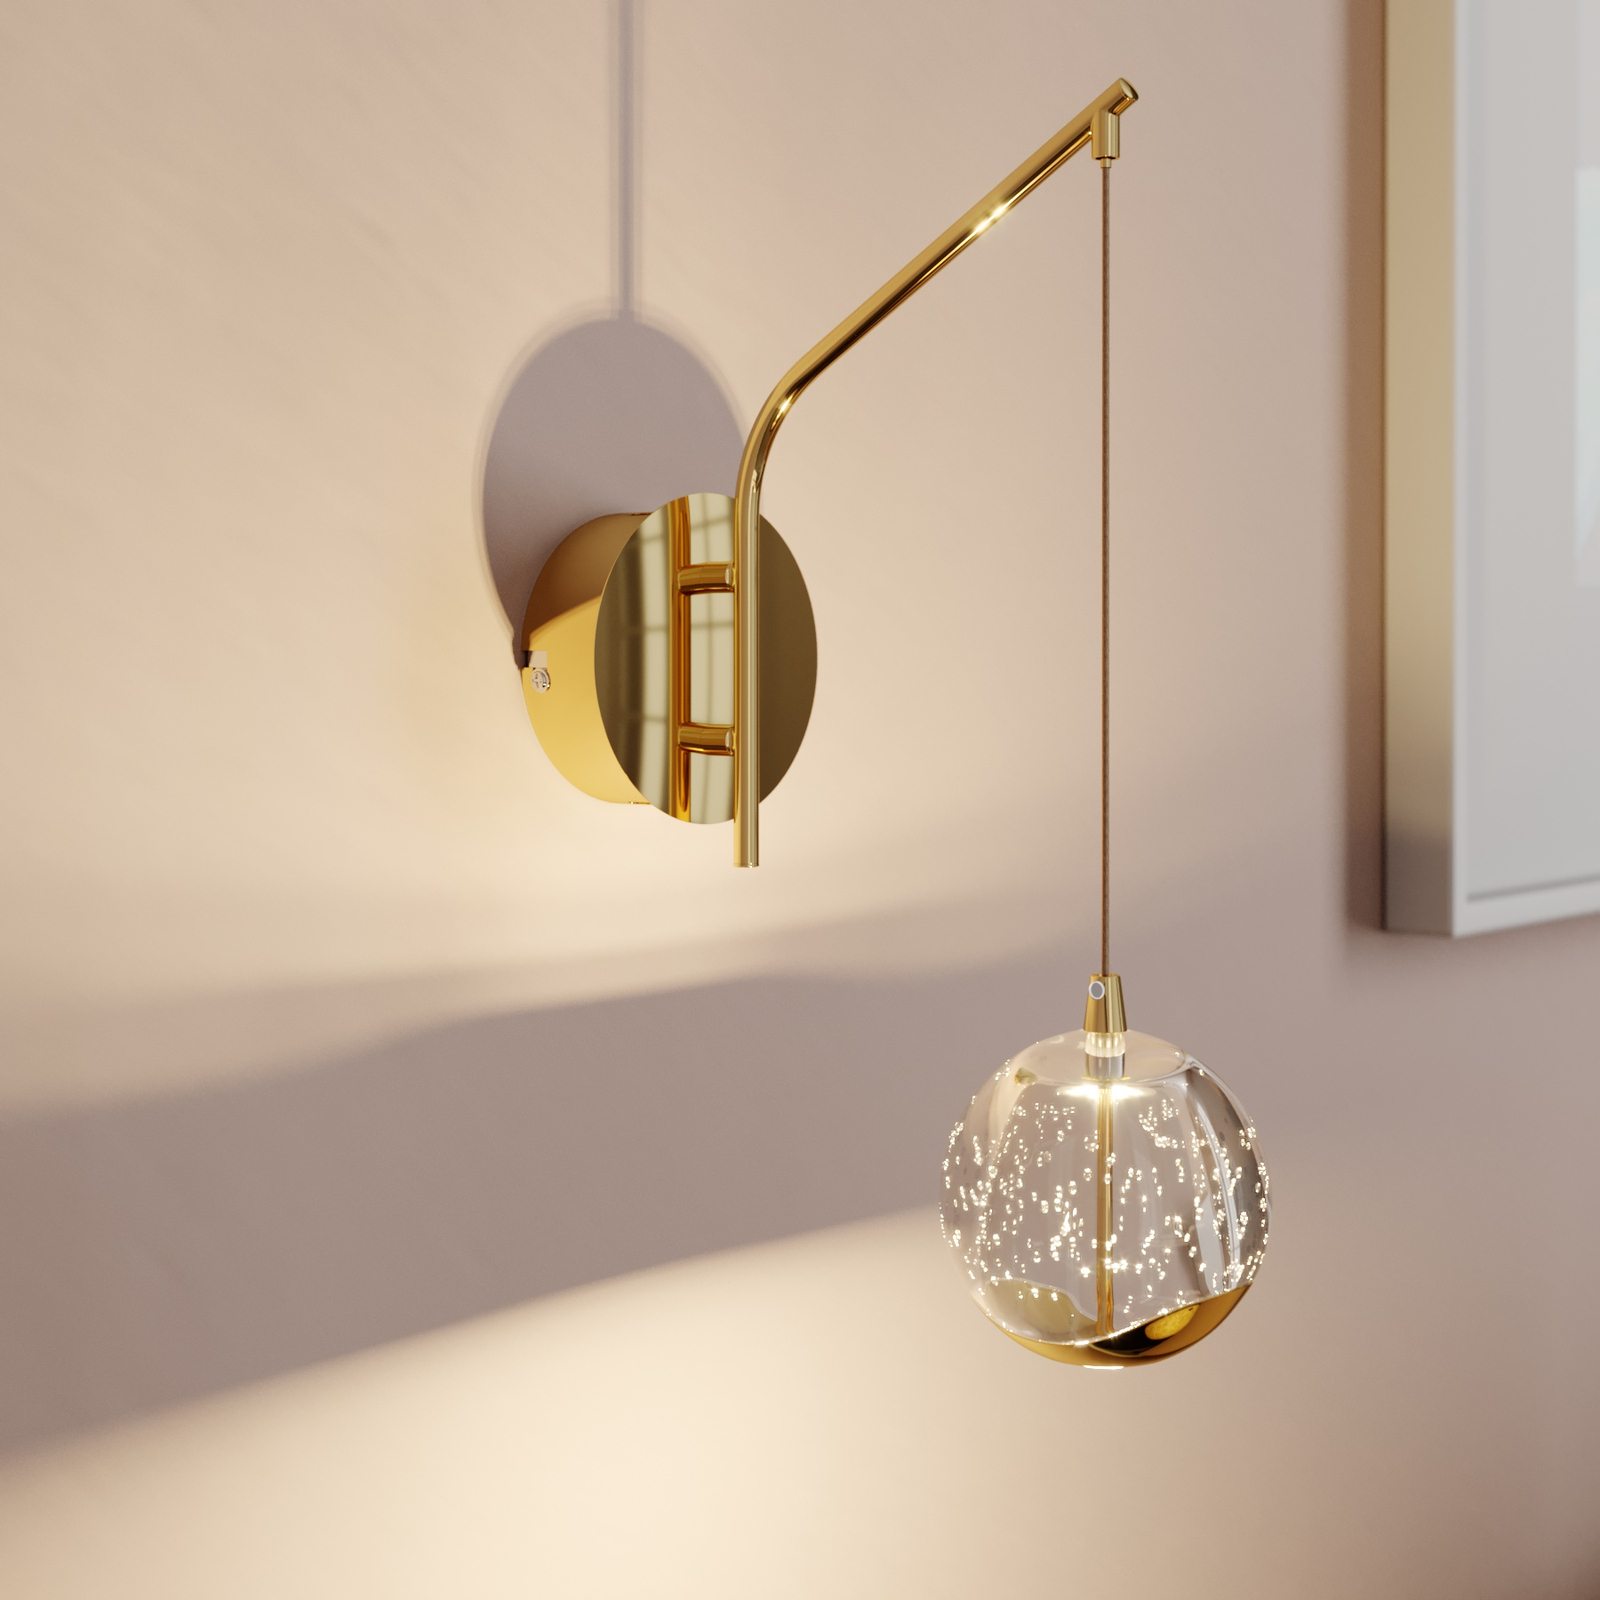 LED wandlamp Hayley hangende bol, goud | Lampen24.nl